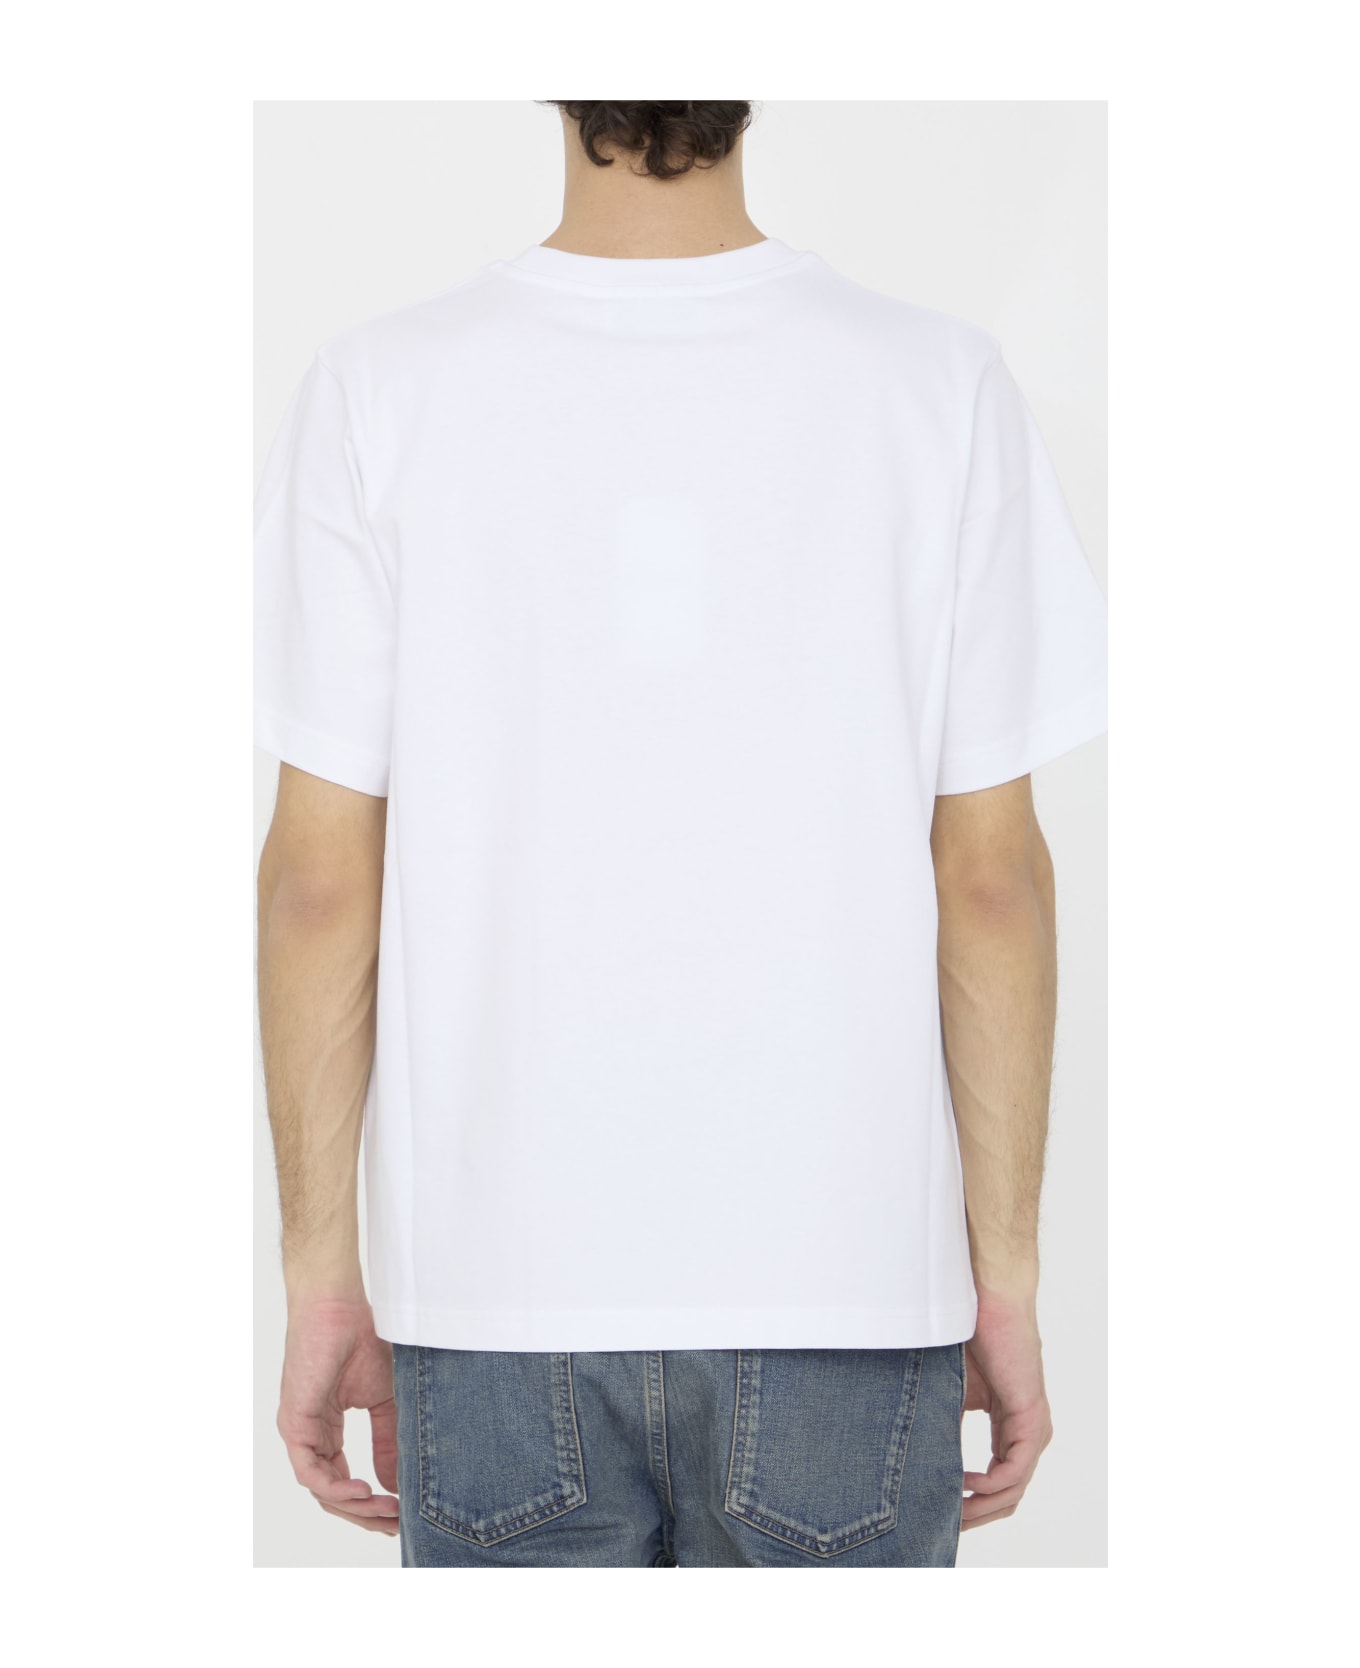 Casablanca Unity Is Power T-shirt - WHITE